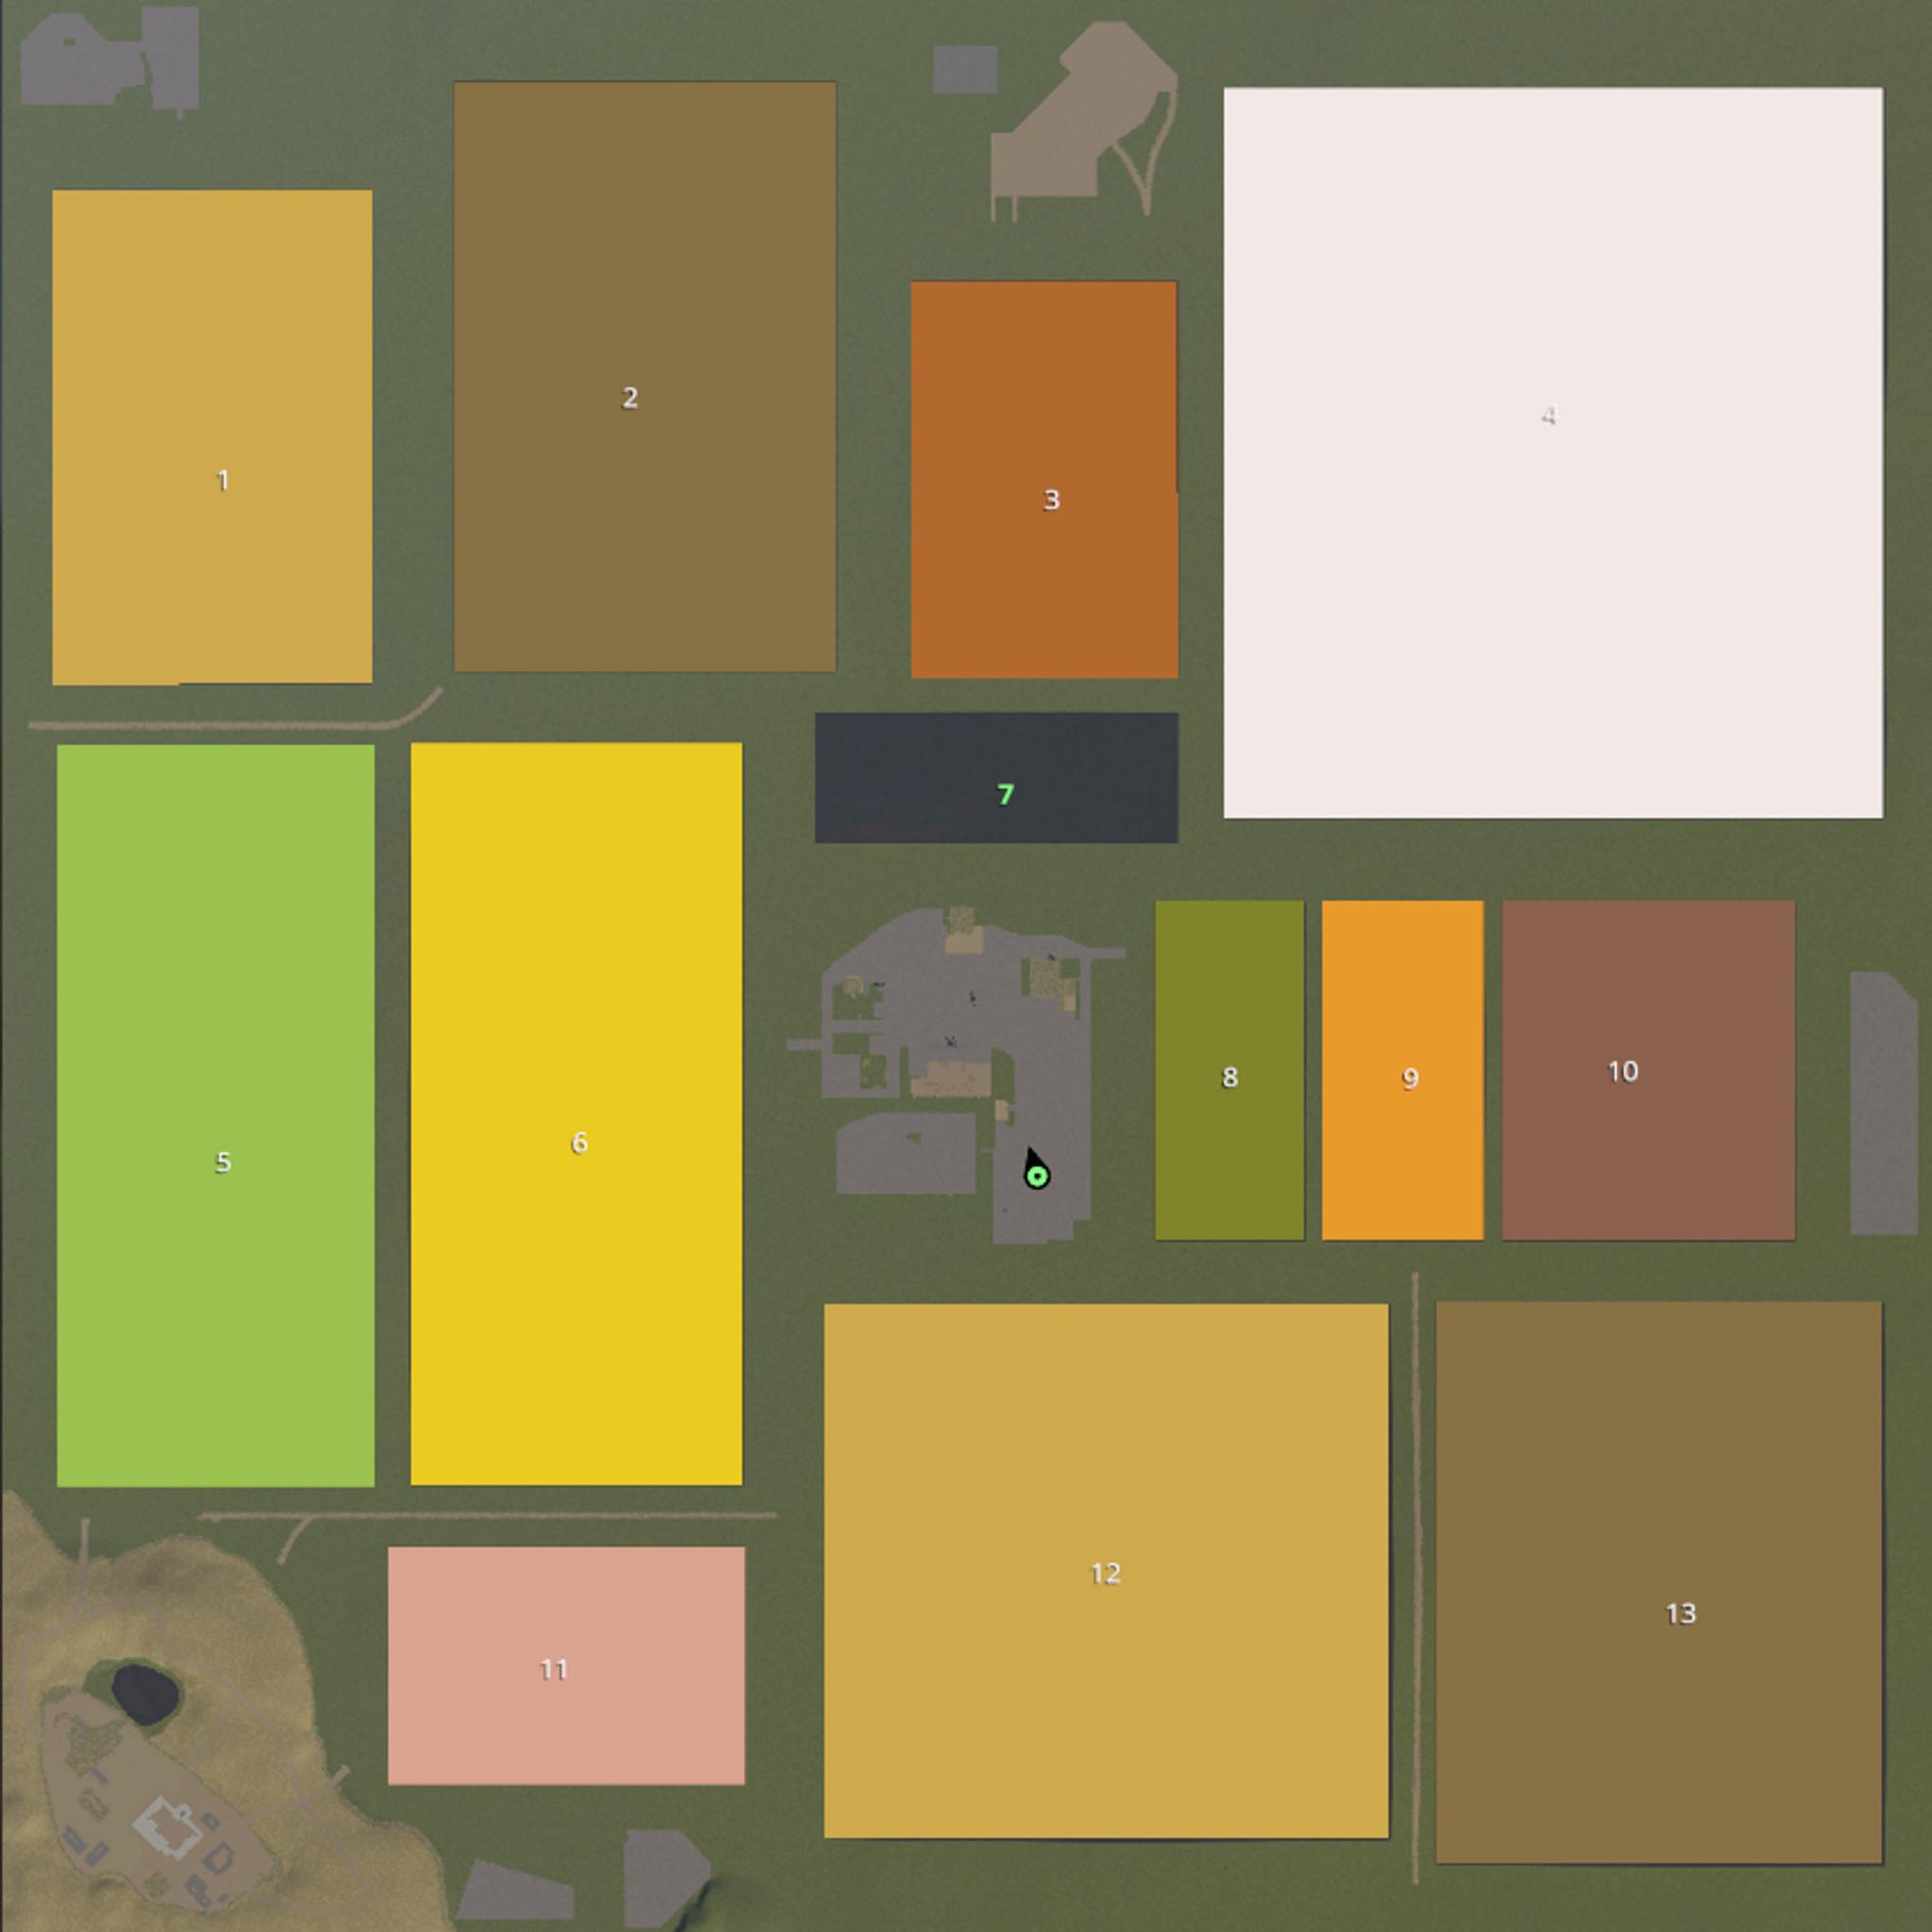 fs19 big fields map